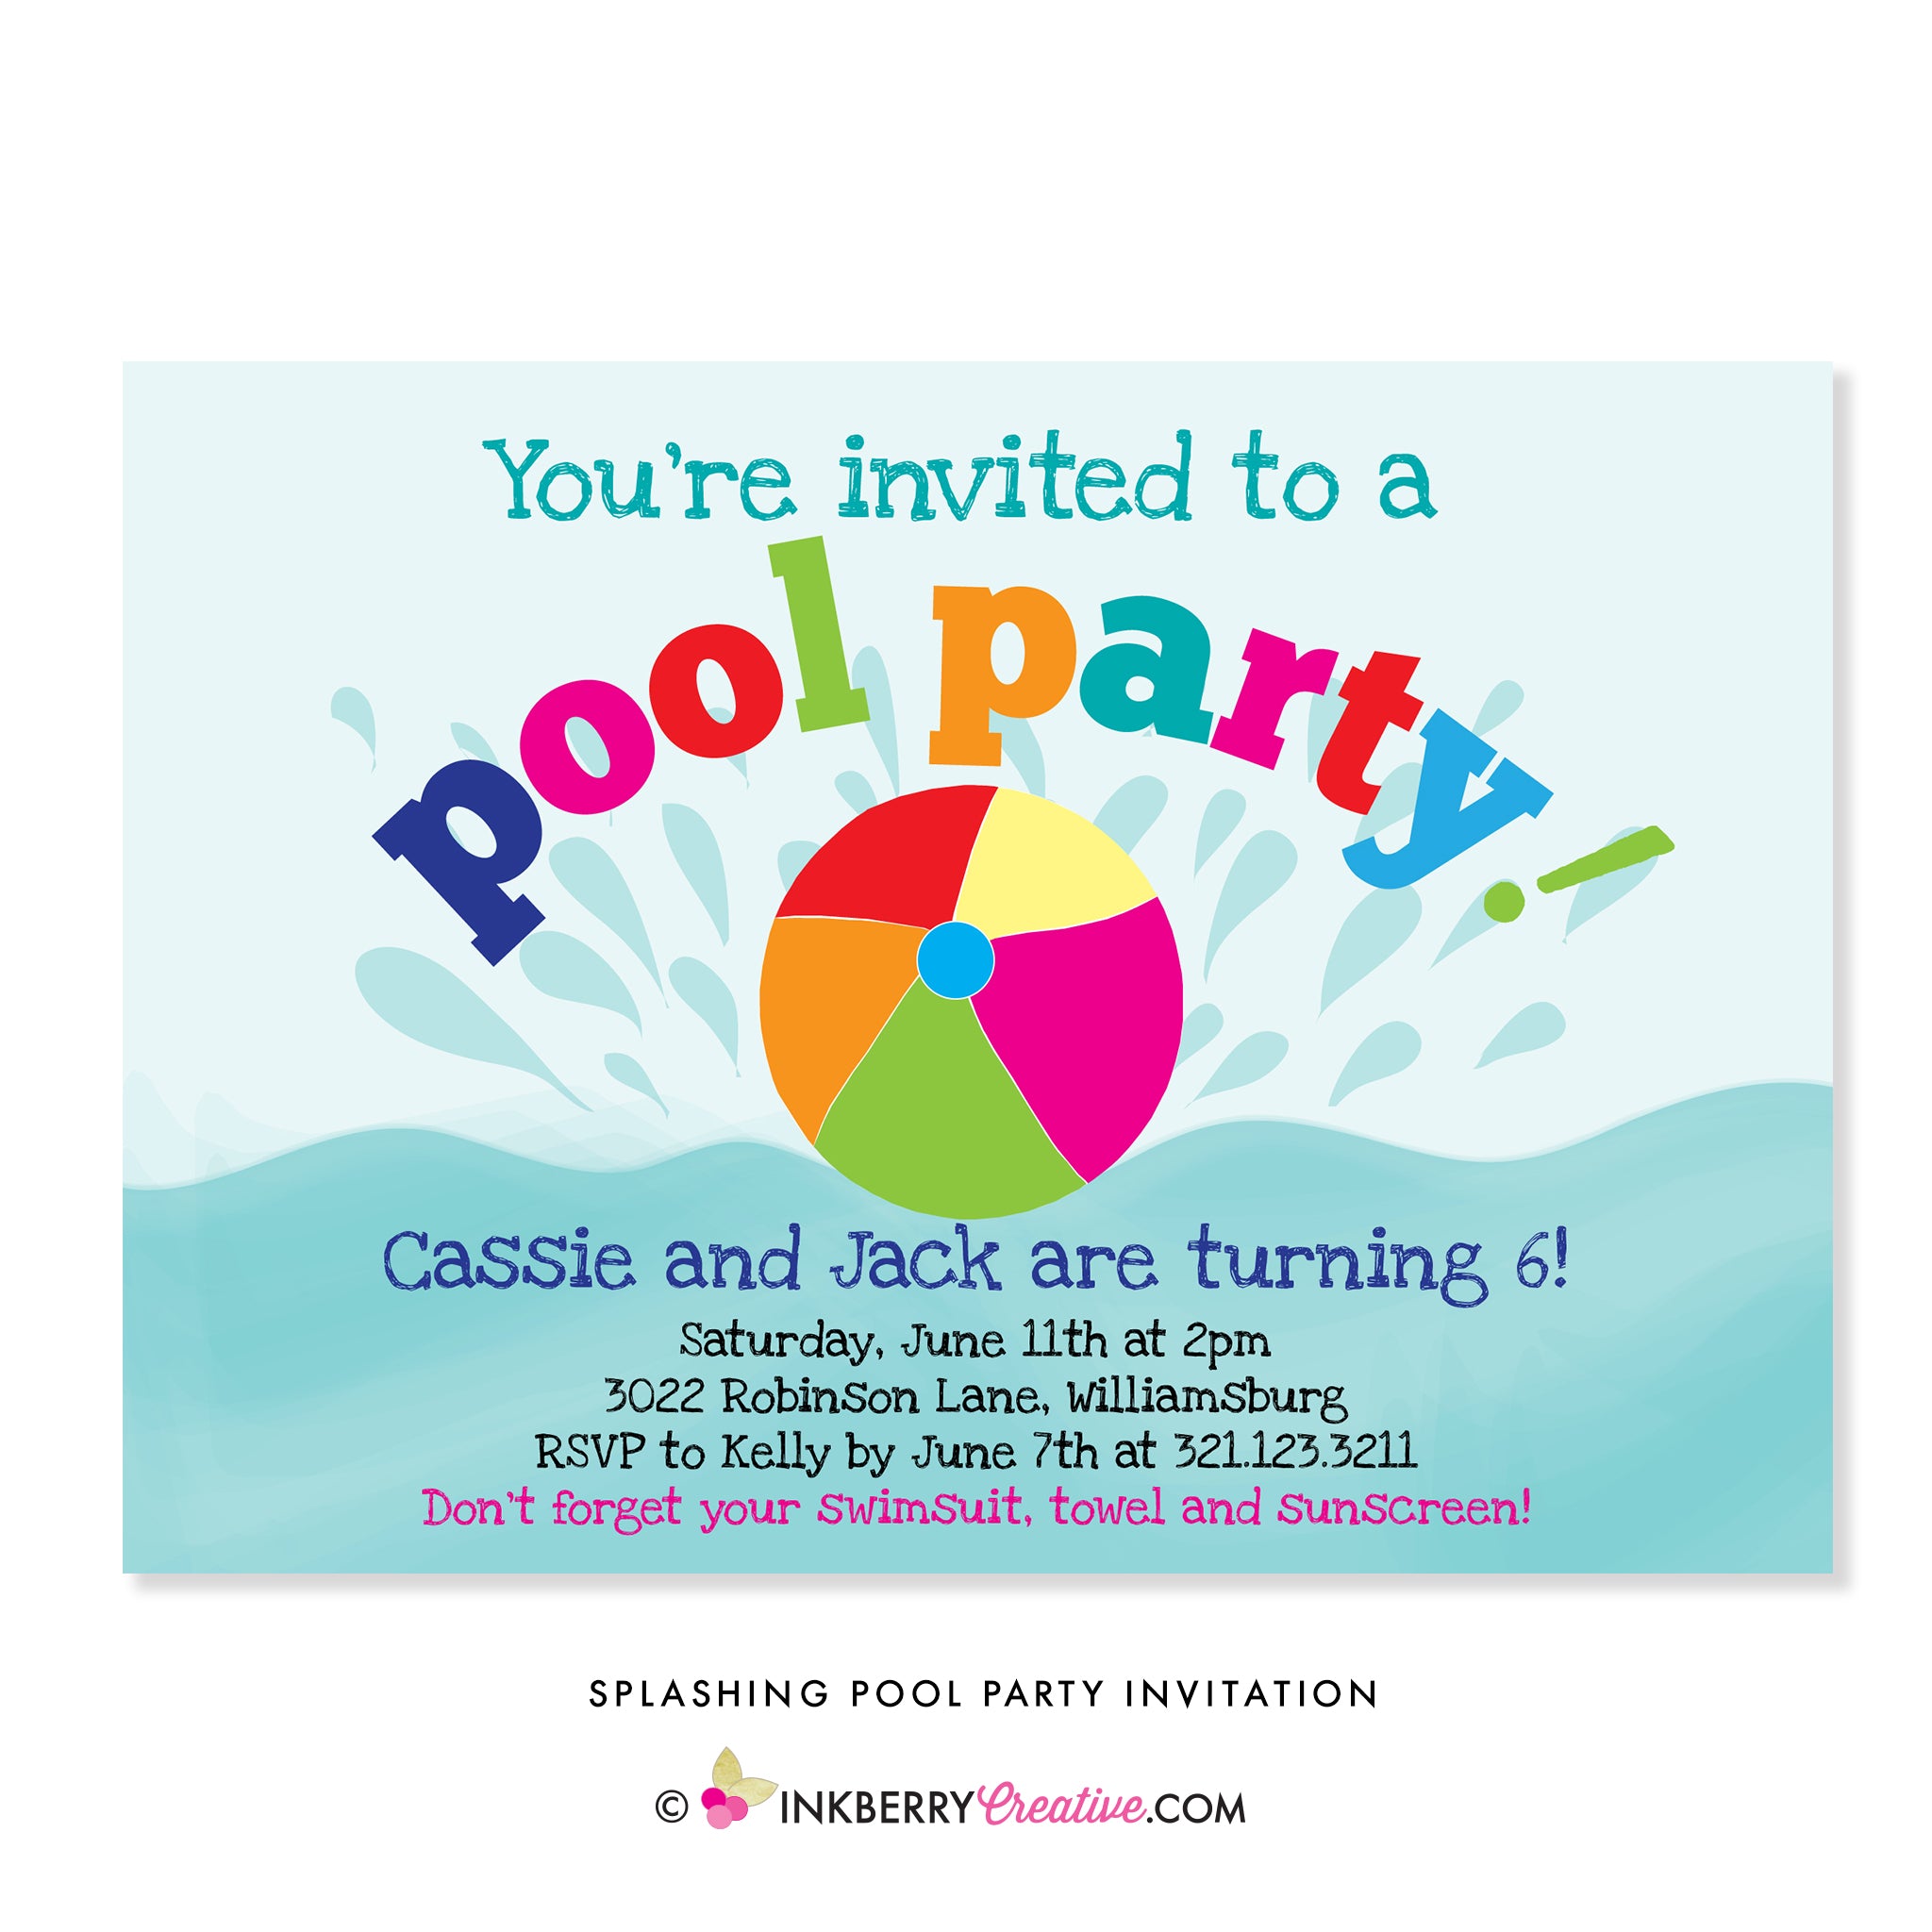 Splashing Pool Party Invitation – Inkberry Creative, Inc.